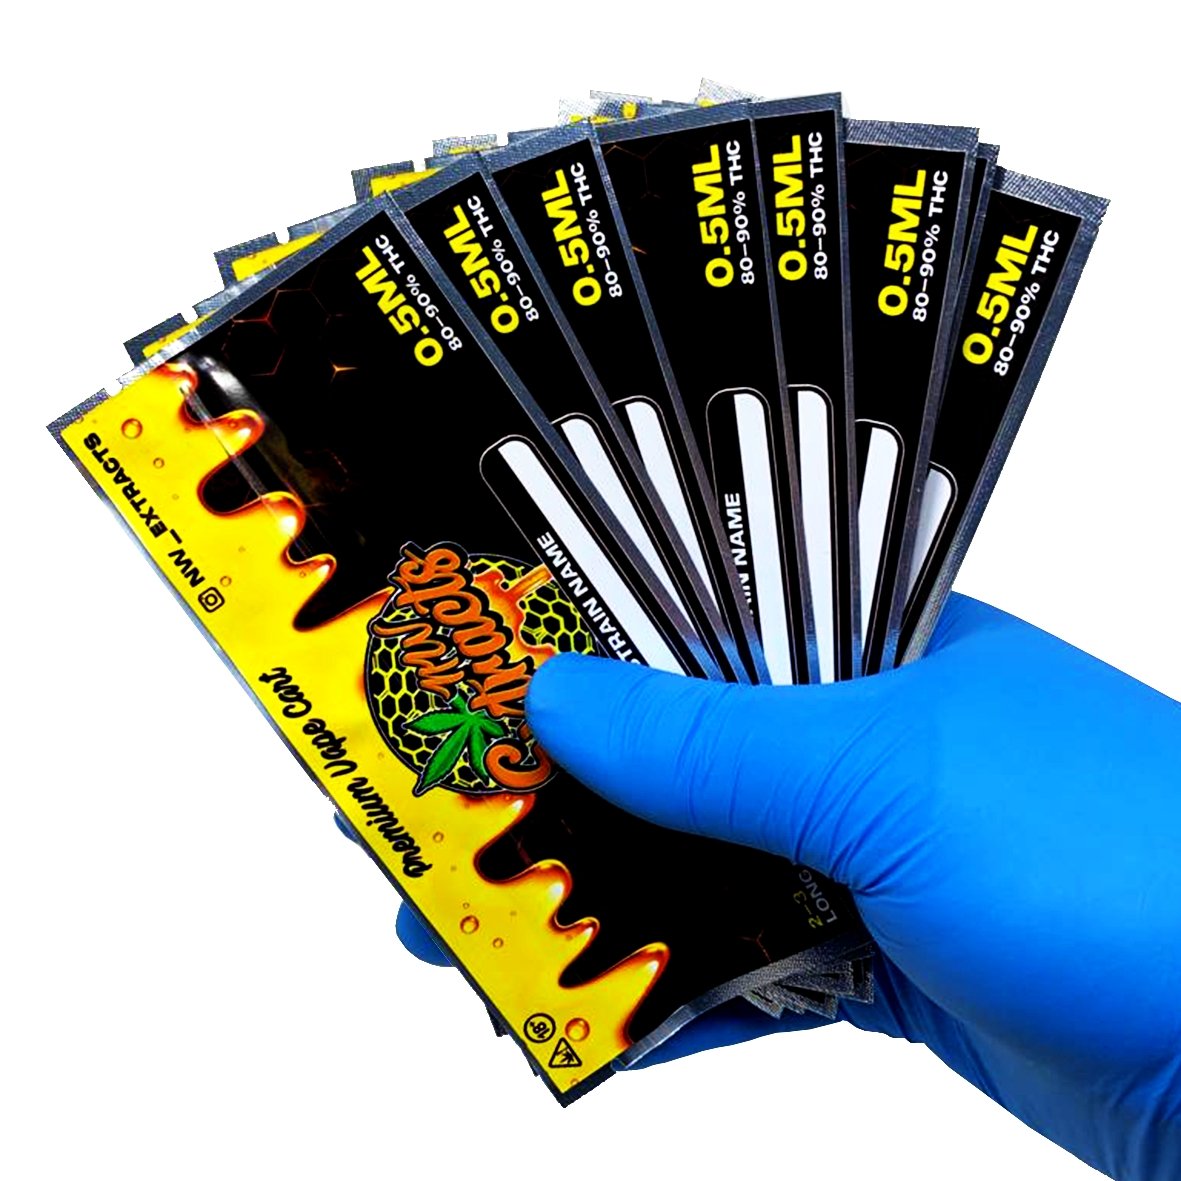 Black/Black Soft Touch Mylar Bags Vape (1000pcs) - Bulk Wholesale Marijuana  Packaging, Vape Cartridges, Joint Tubes, Custom Labels, and More!